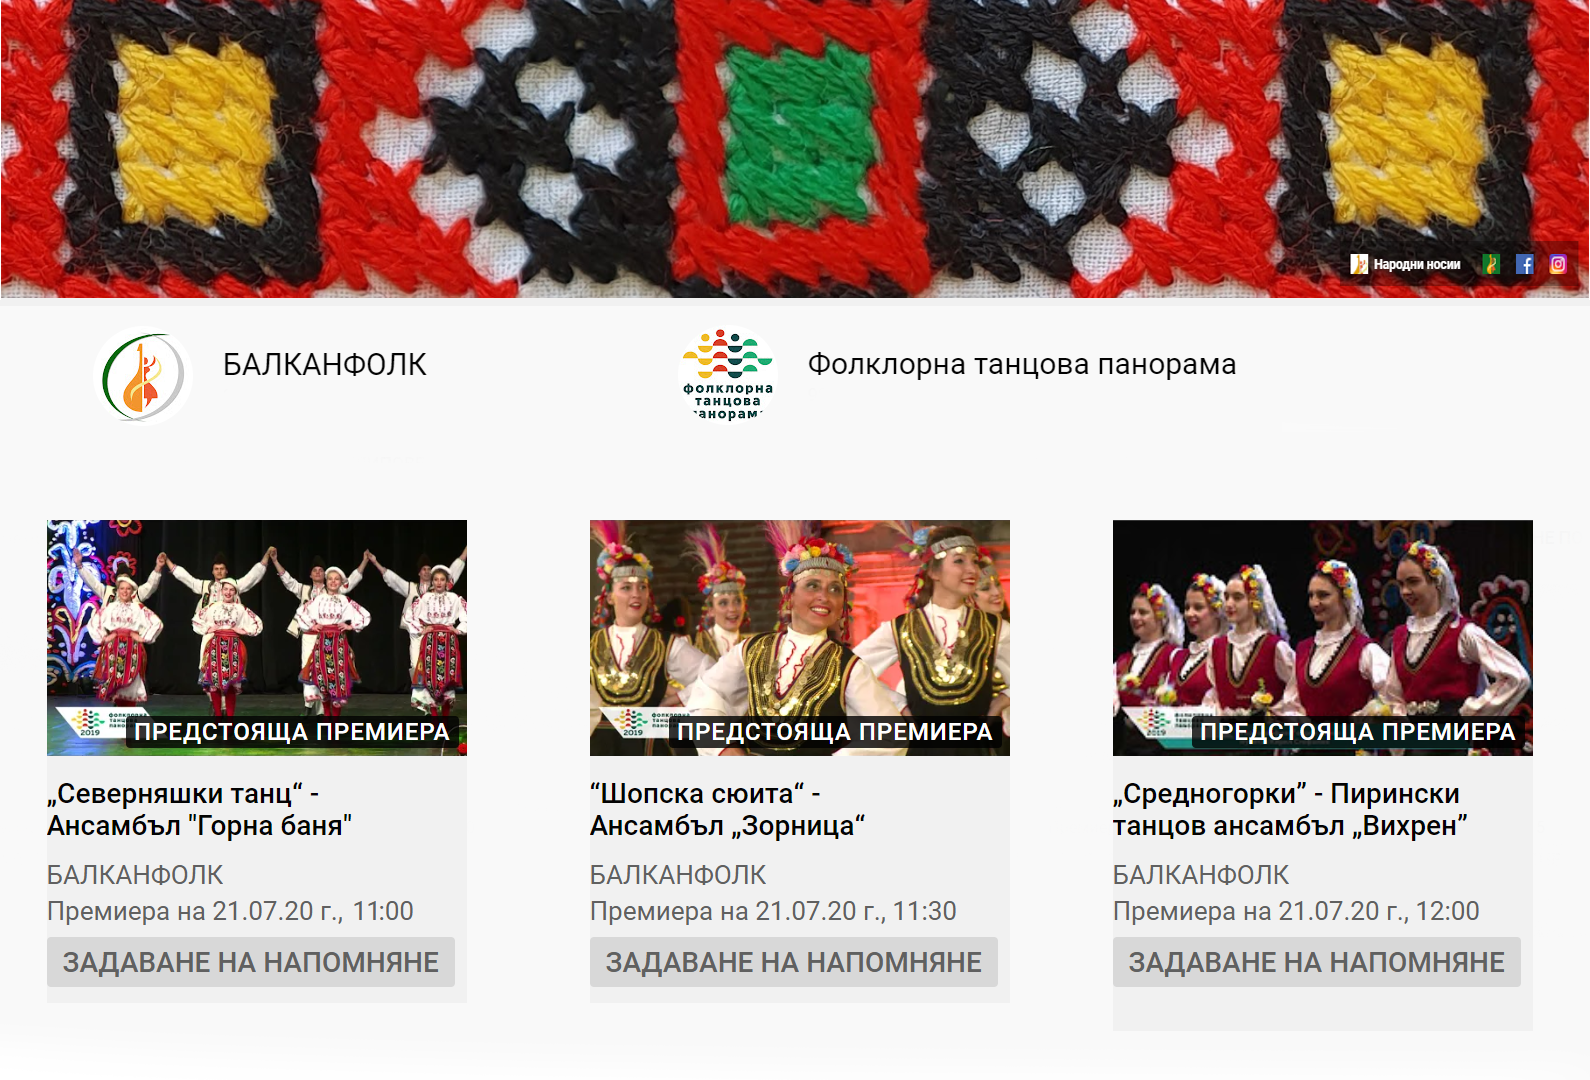 Bulgarian Folklore Ensembles Gorna Banya, Zornitsa, Vihren